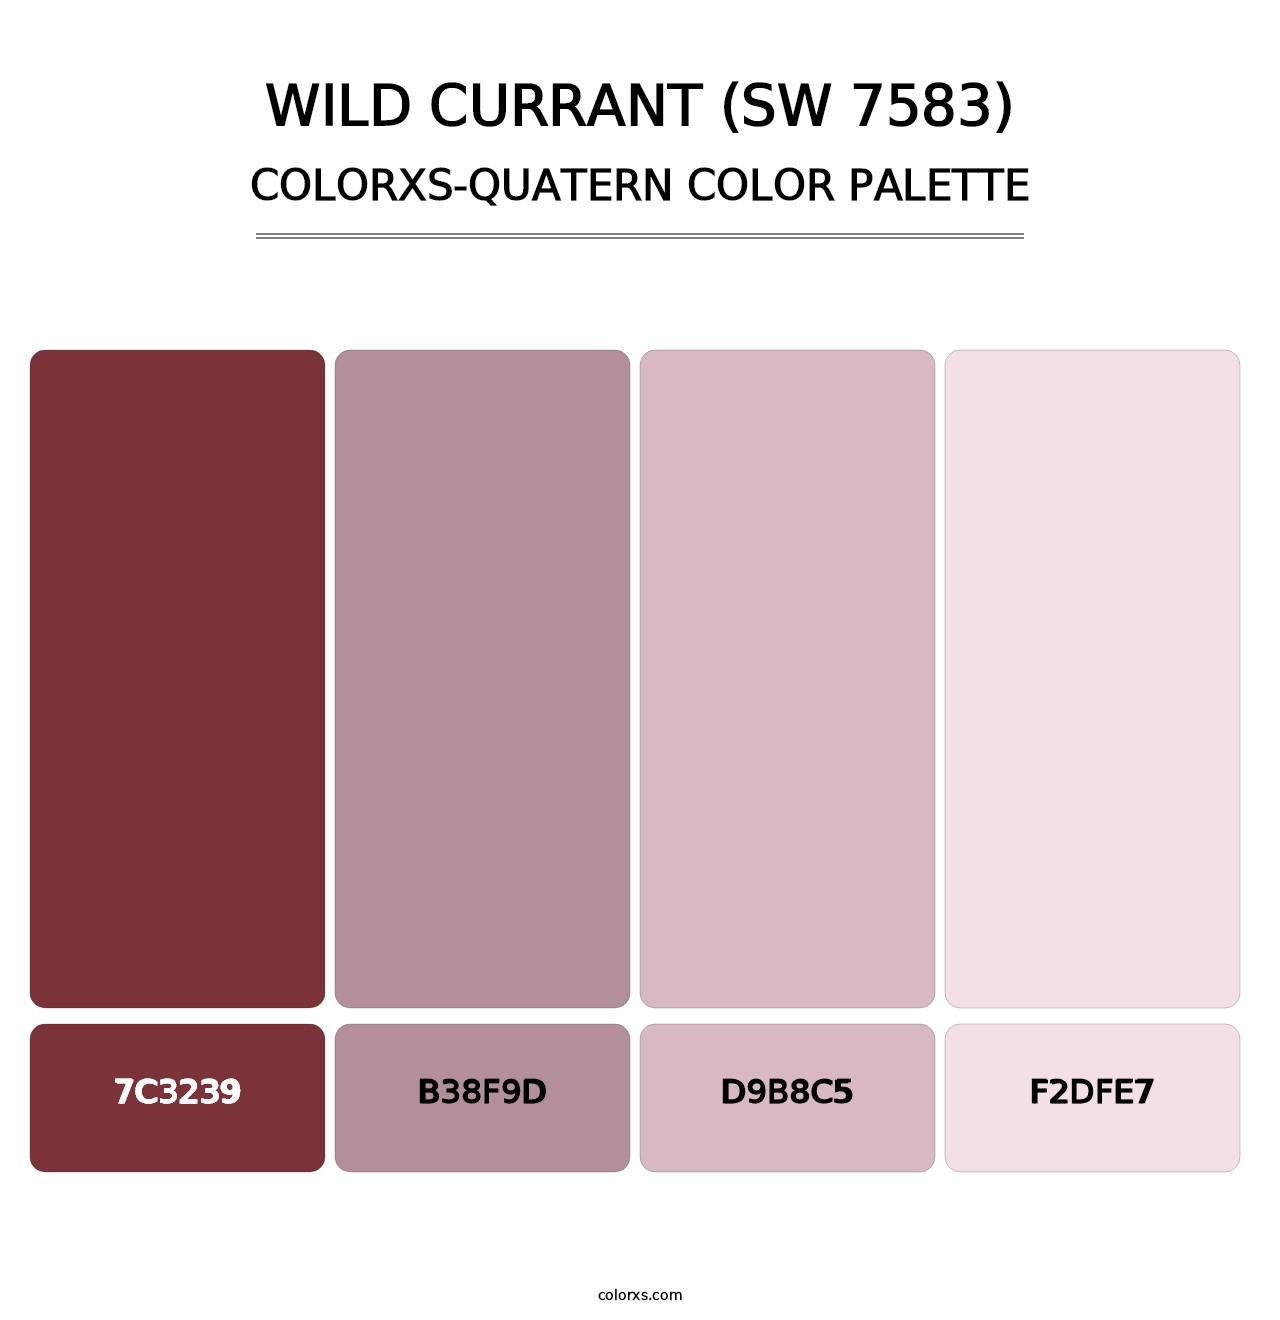 Wild Currant (SW 7583) - Colorxs Quatern Palette